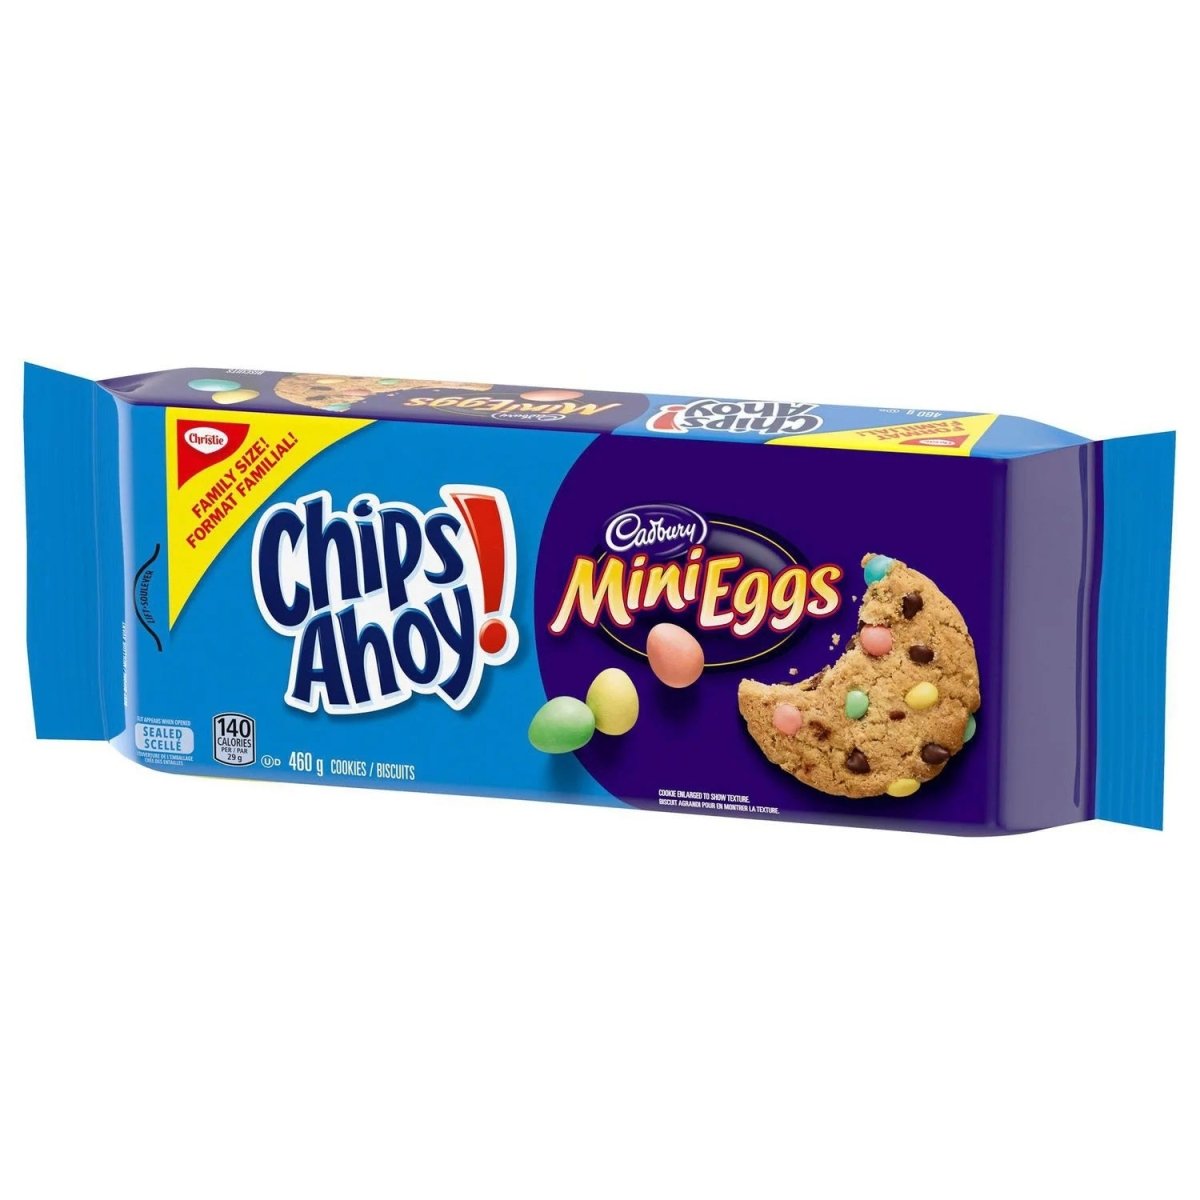 Chips A'hoy Cadbury's Mini Eggs 460g - Candy Mail UK